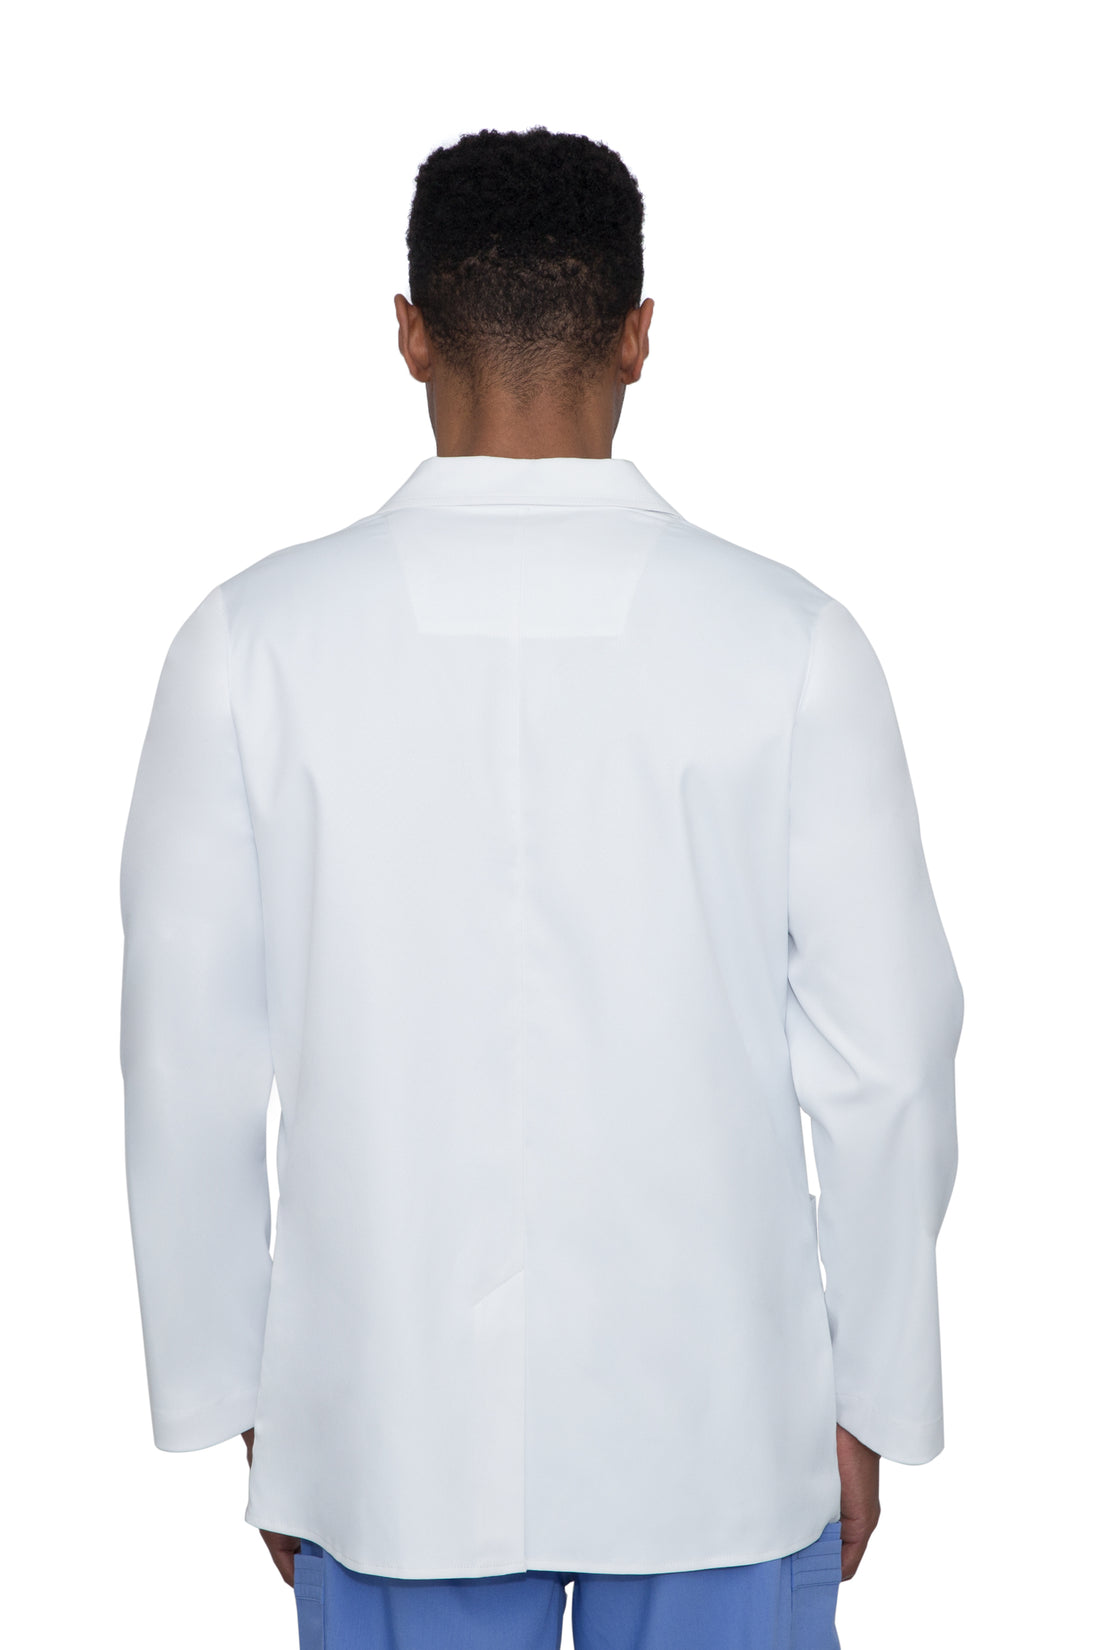 The White Coat By Healing Hands Men’s Lab Coat 